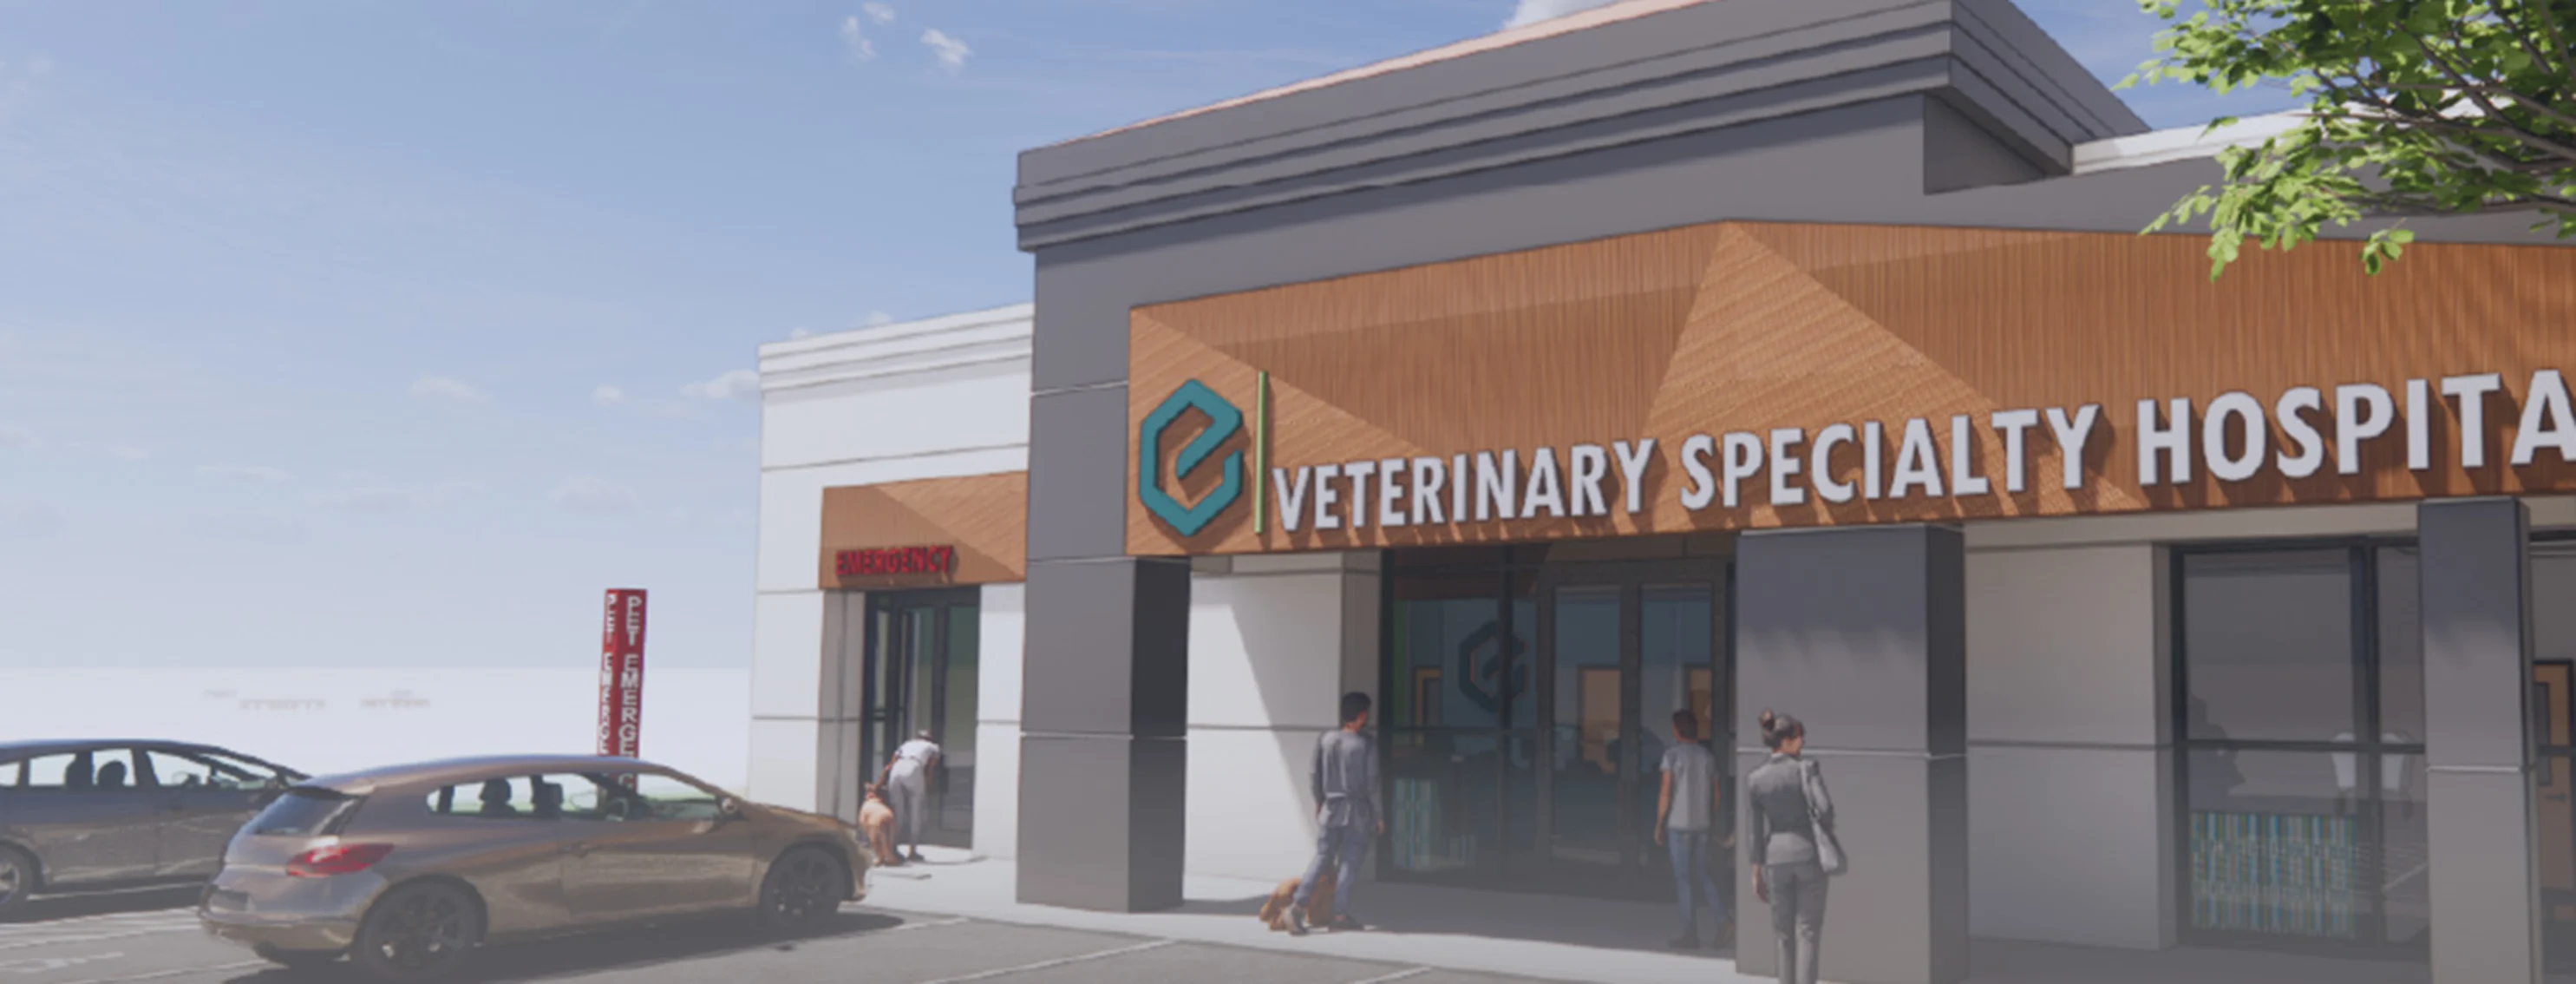 Rendering of Veterinary Specialty Hospital Roseville's new facility